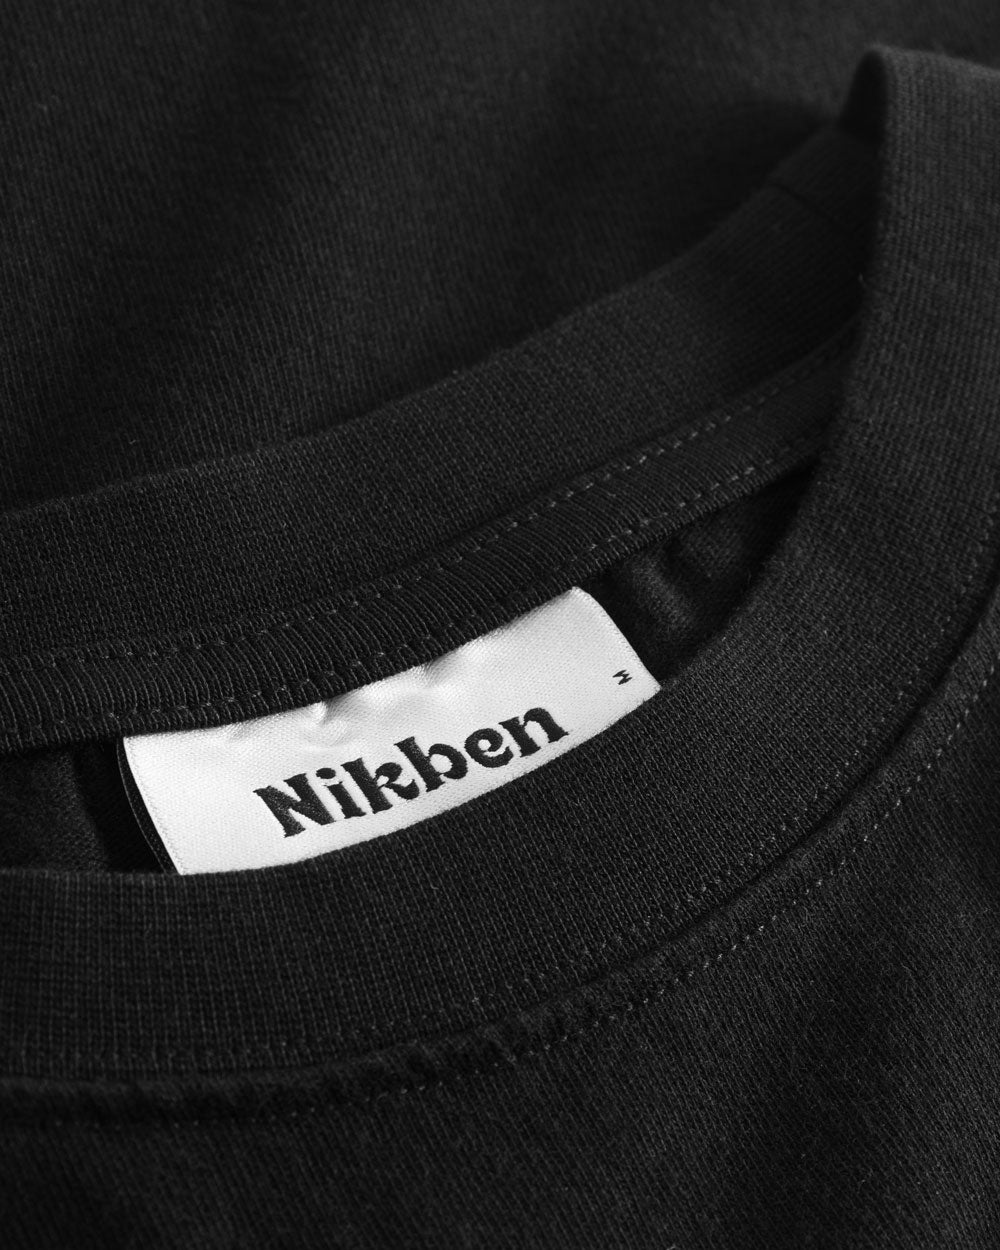 Nikben neck label on black t-shirt